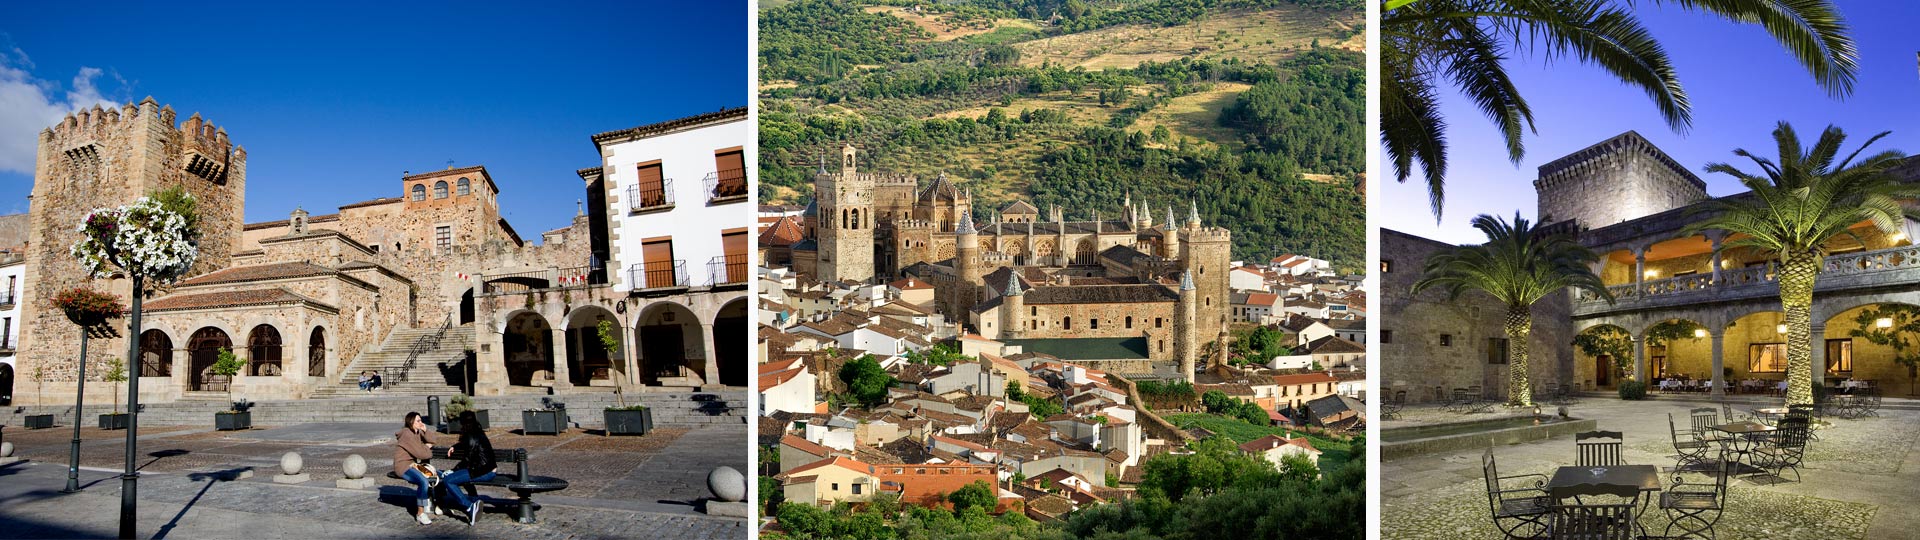 Paisagens de castelos na Estremadura: Cáceres, Guadalupe e Parador de Jarandilla de la Vera